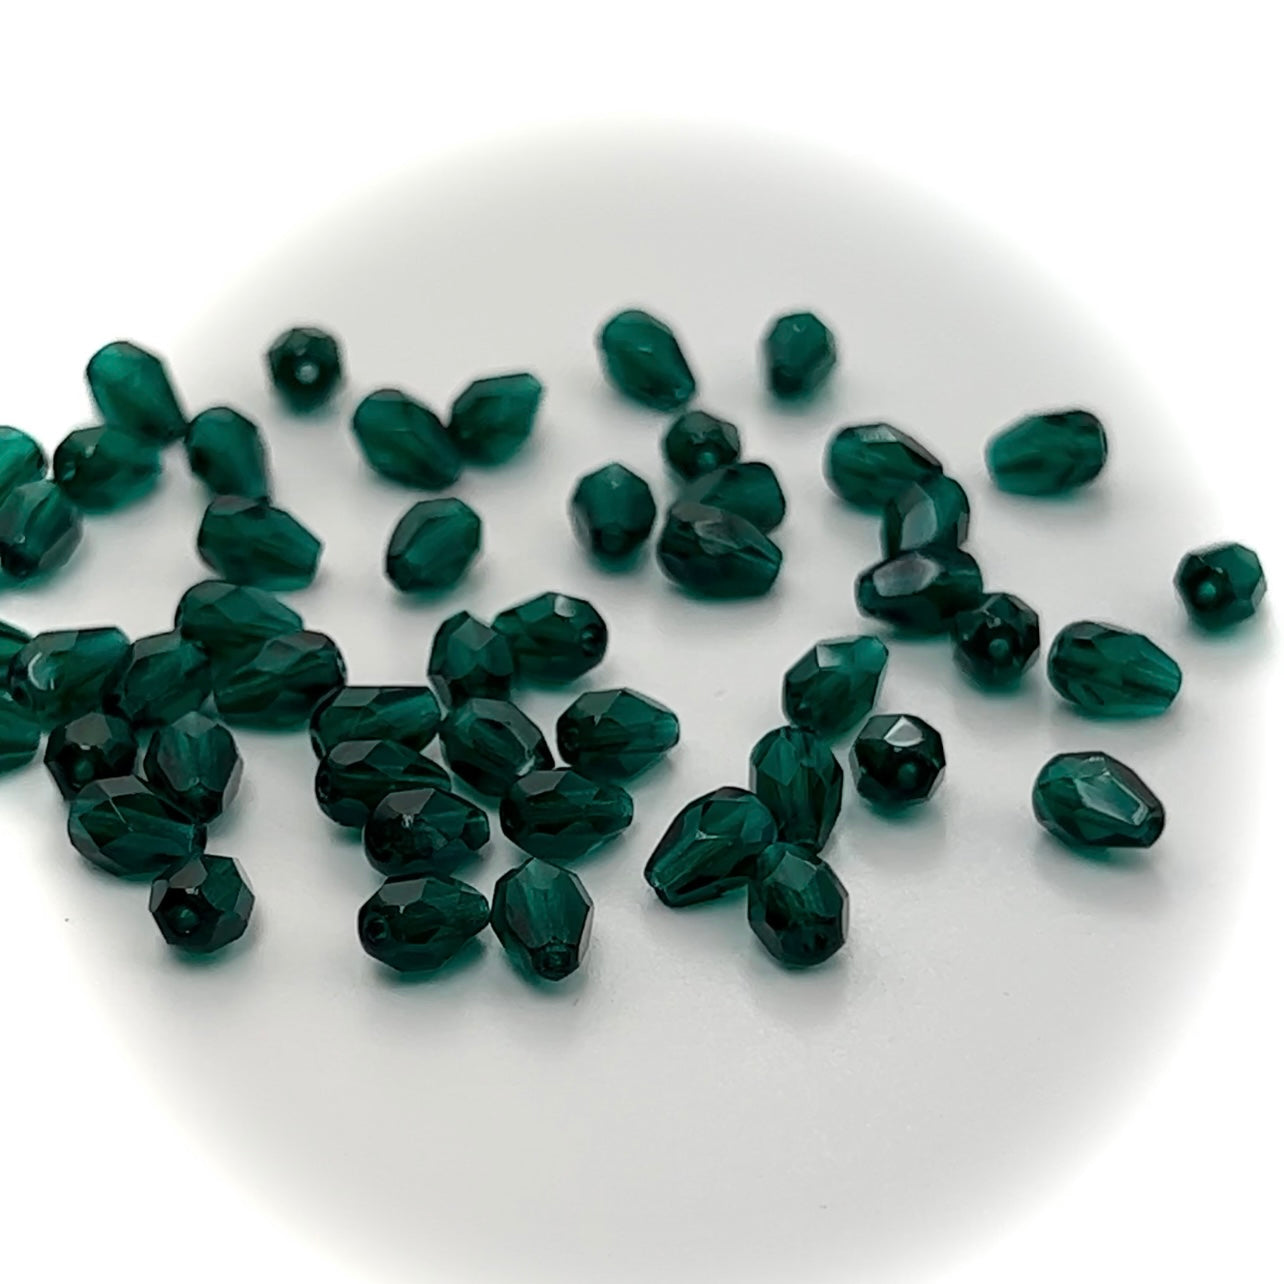 Czech Glass Pear Shaped Fire Polished Beads 8x6mm Emerald green Tear Drops, 50 pieces, J038